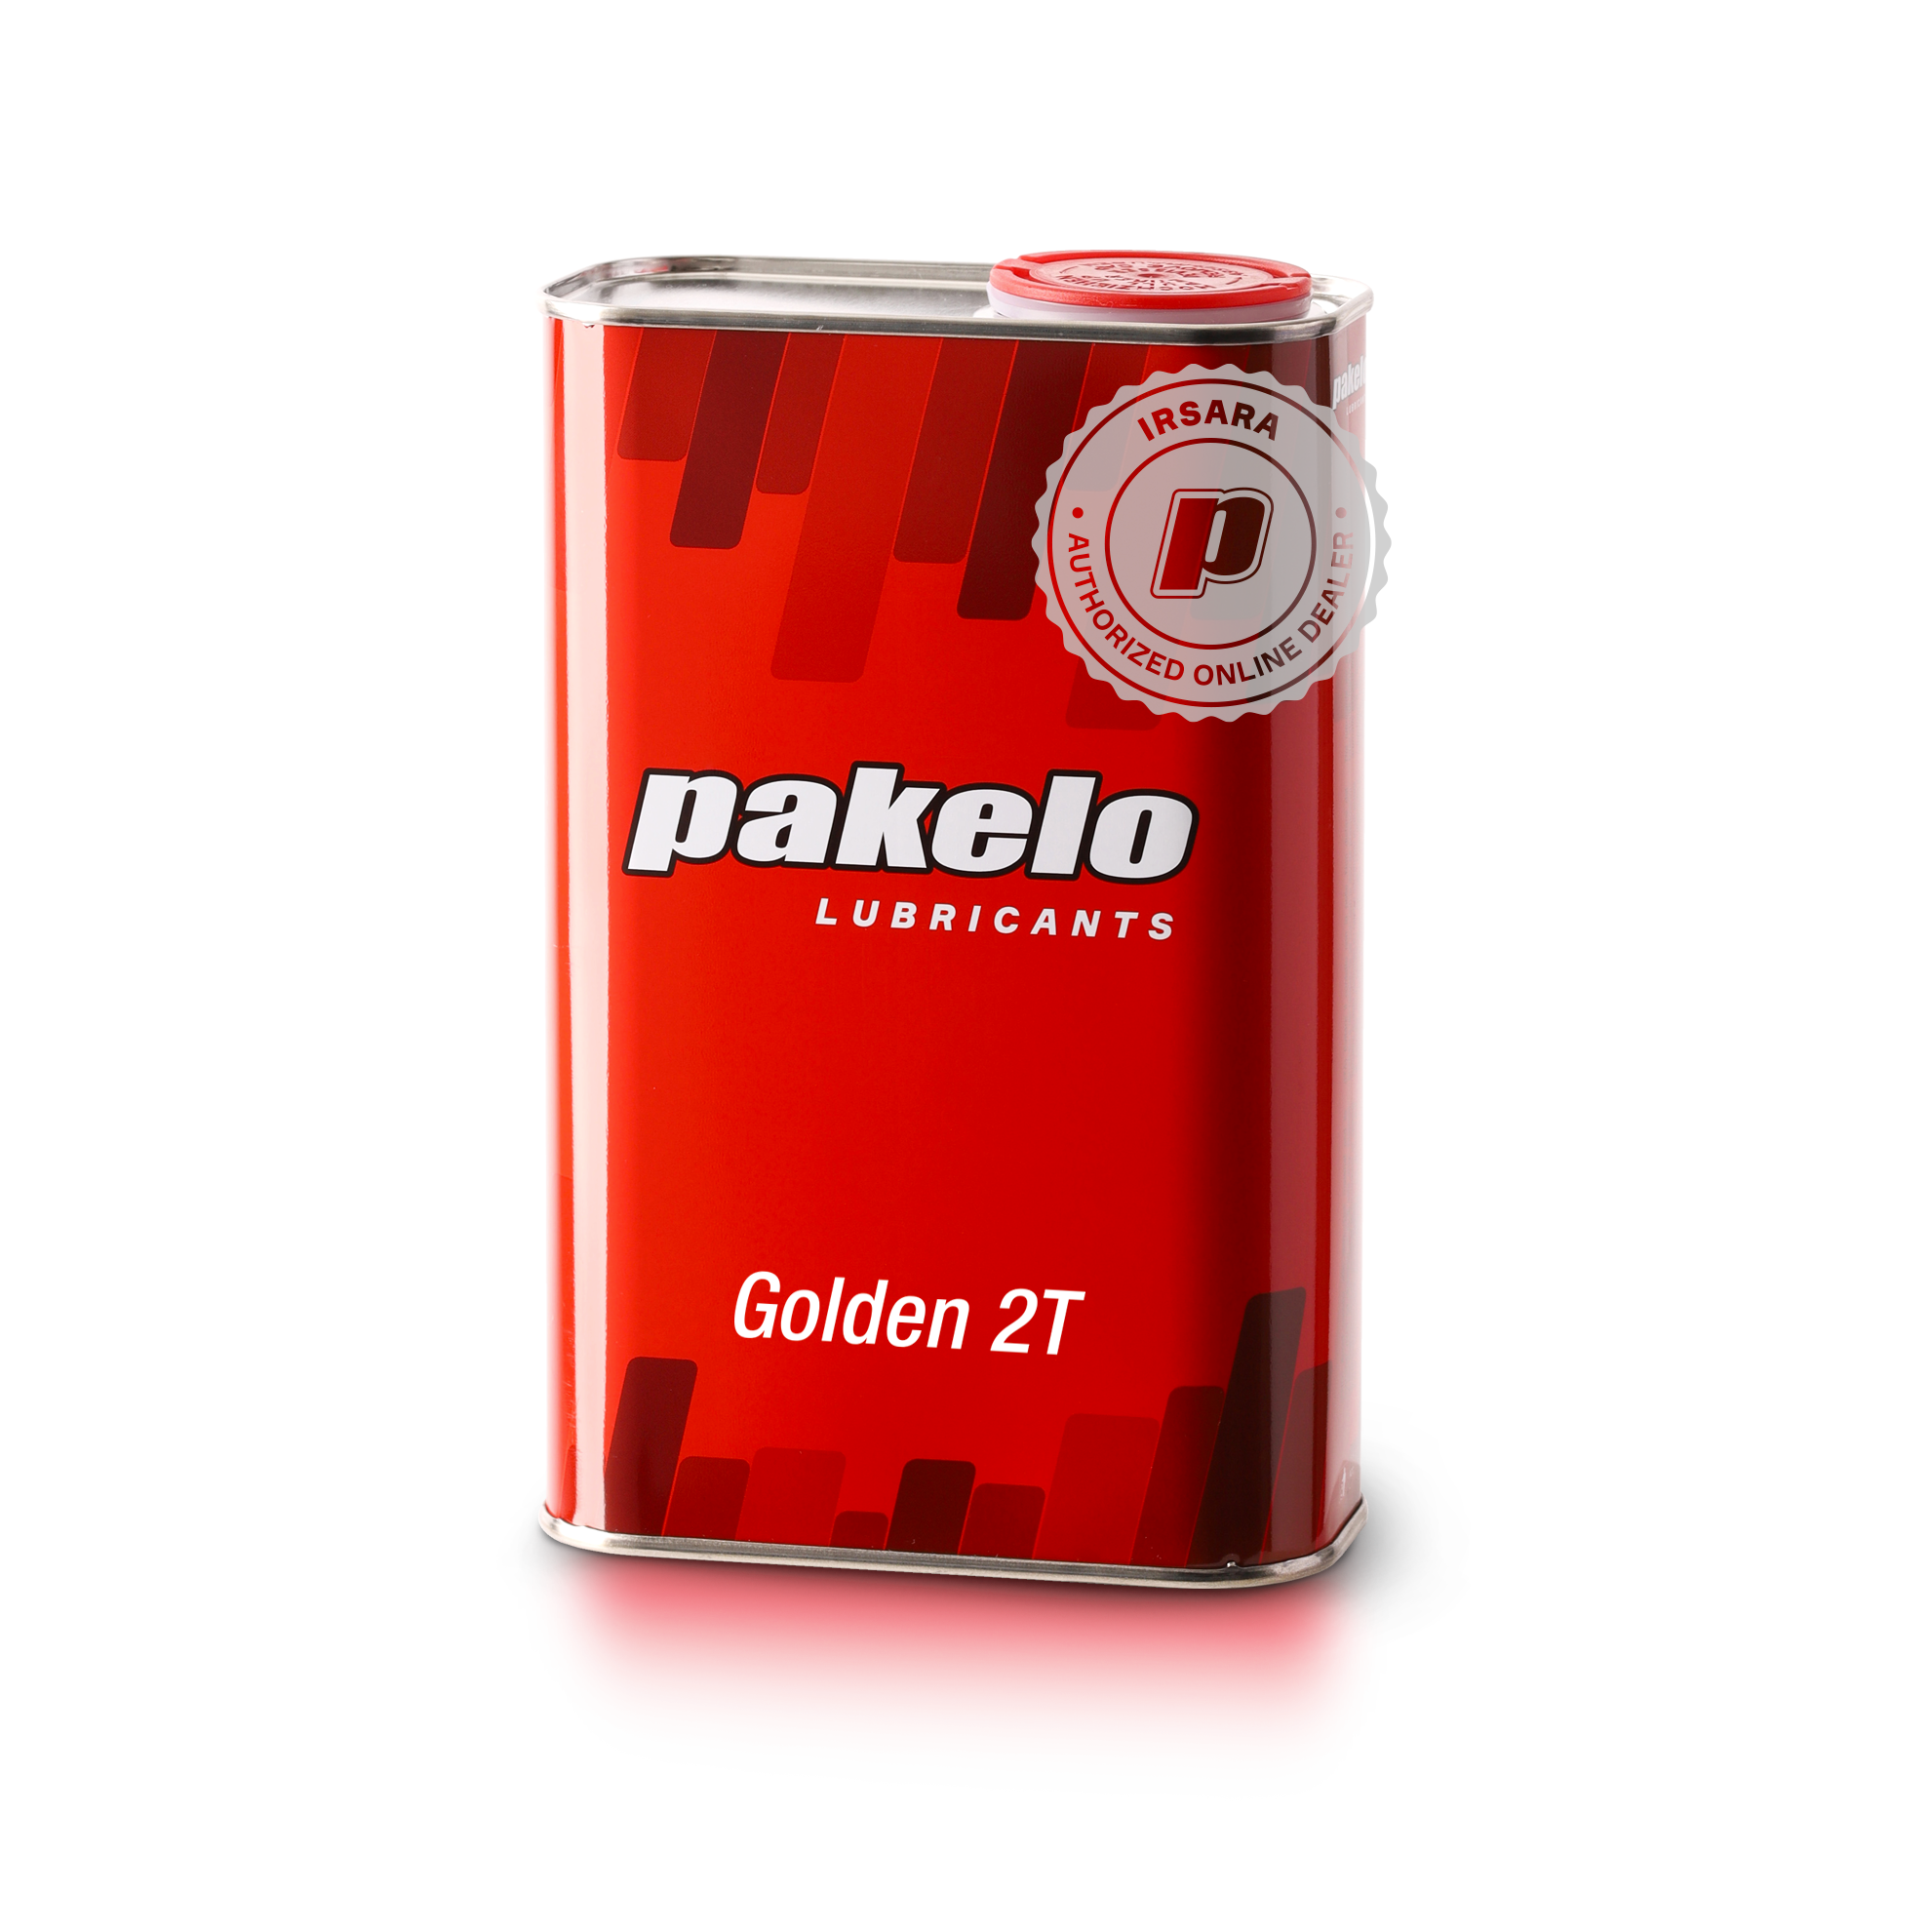 Pakelo Golden 2T (1L)